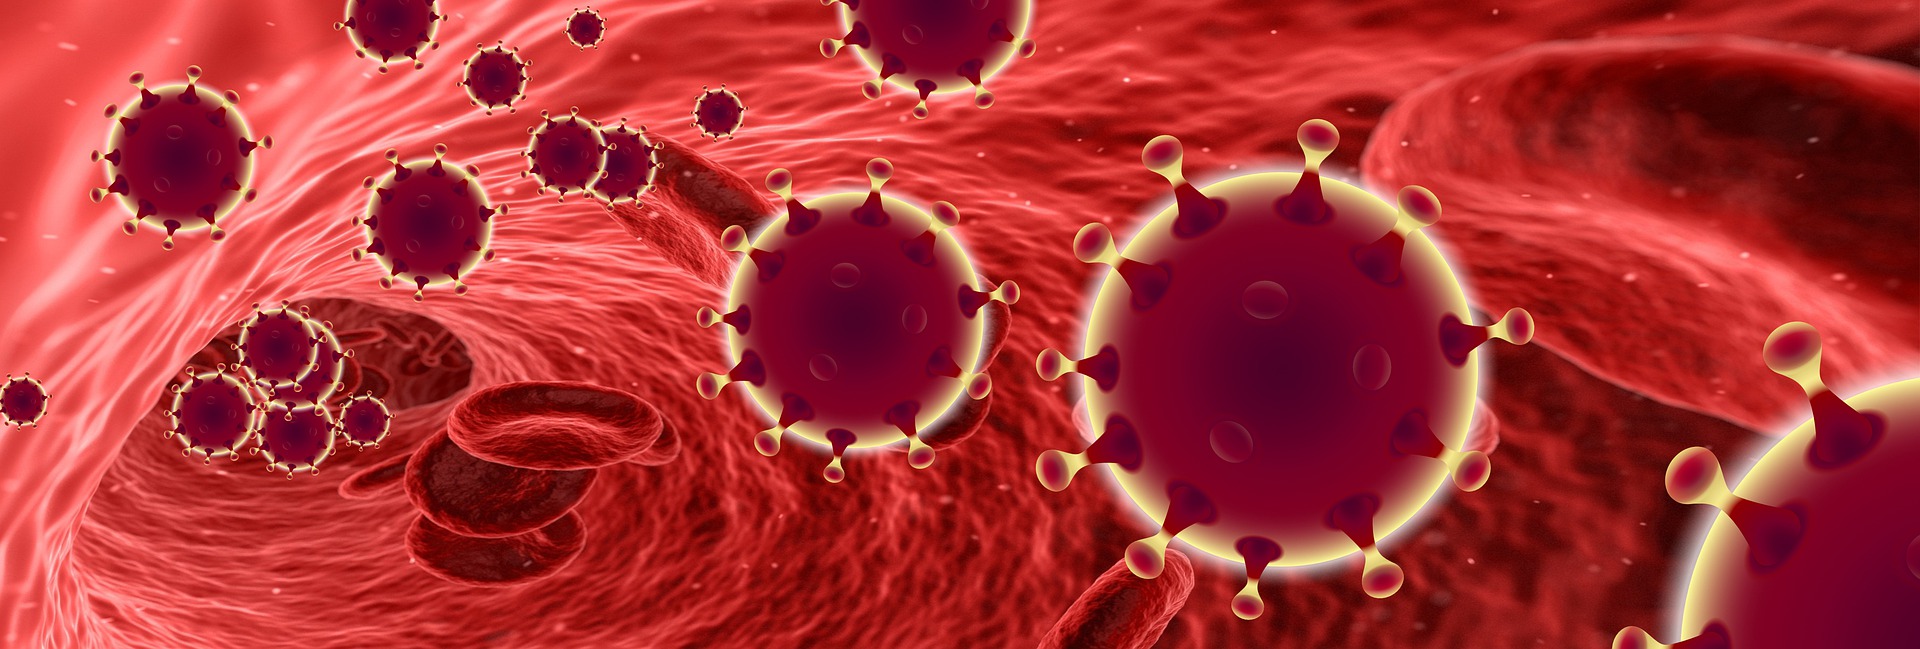 The Immune system warriors: GAMED antibodies